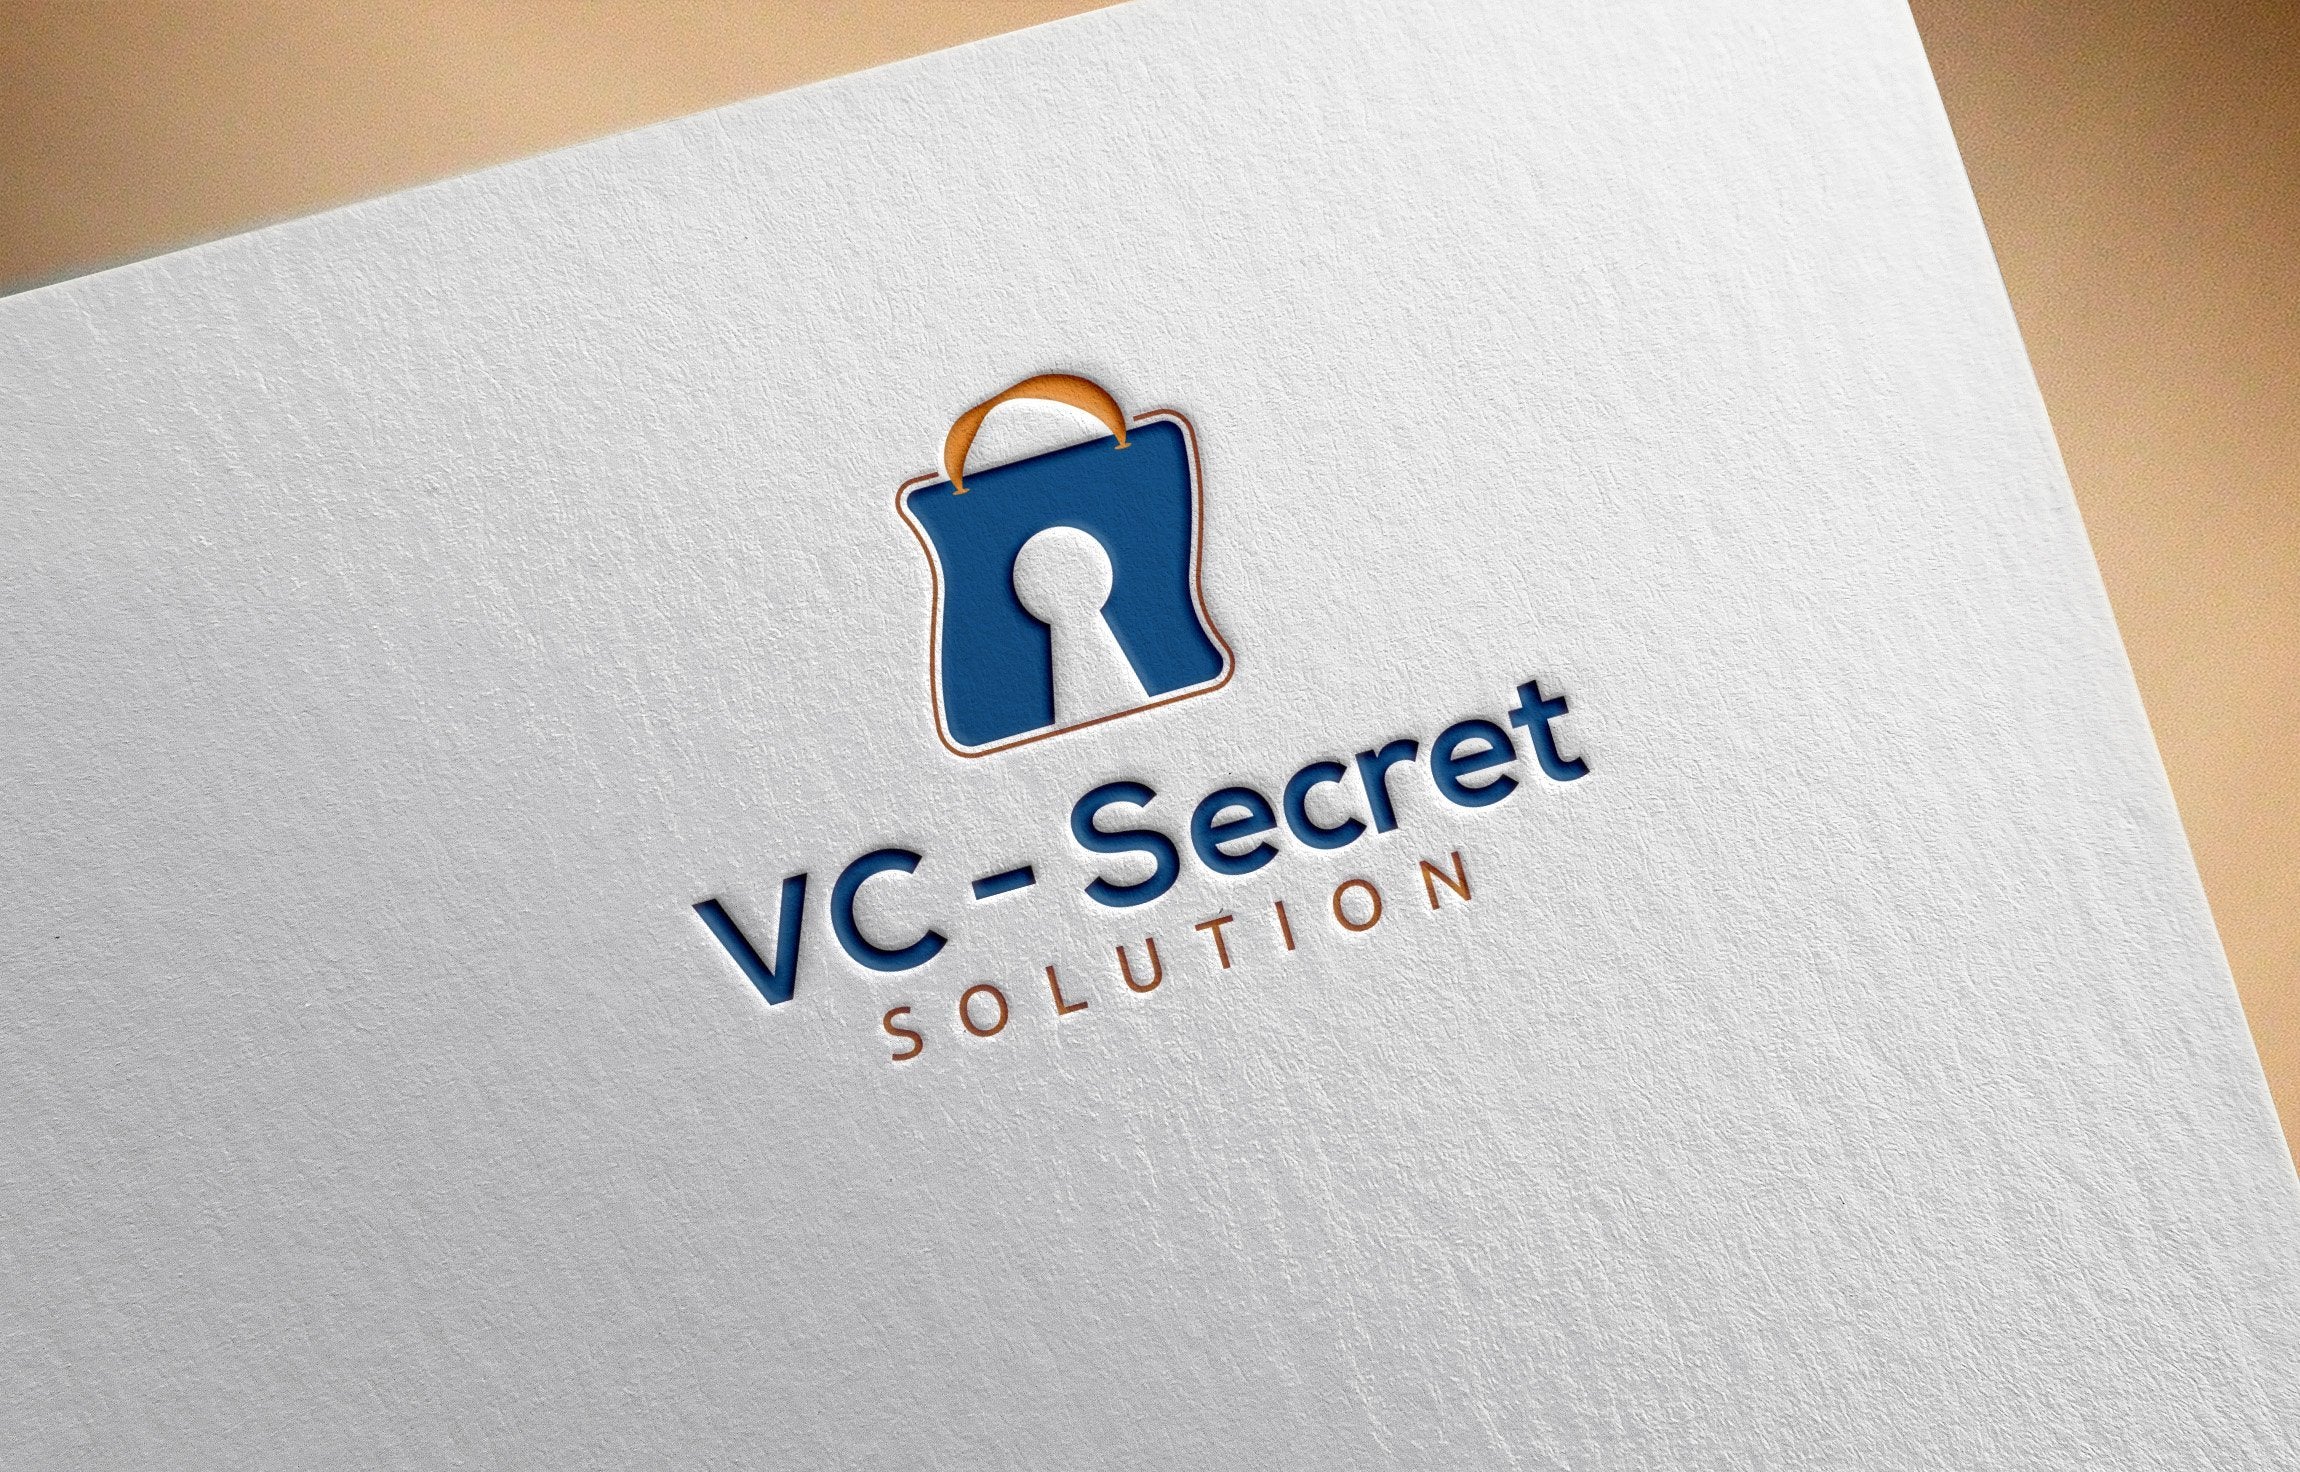 VC-Secret